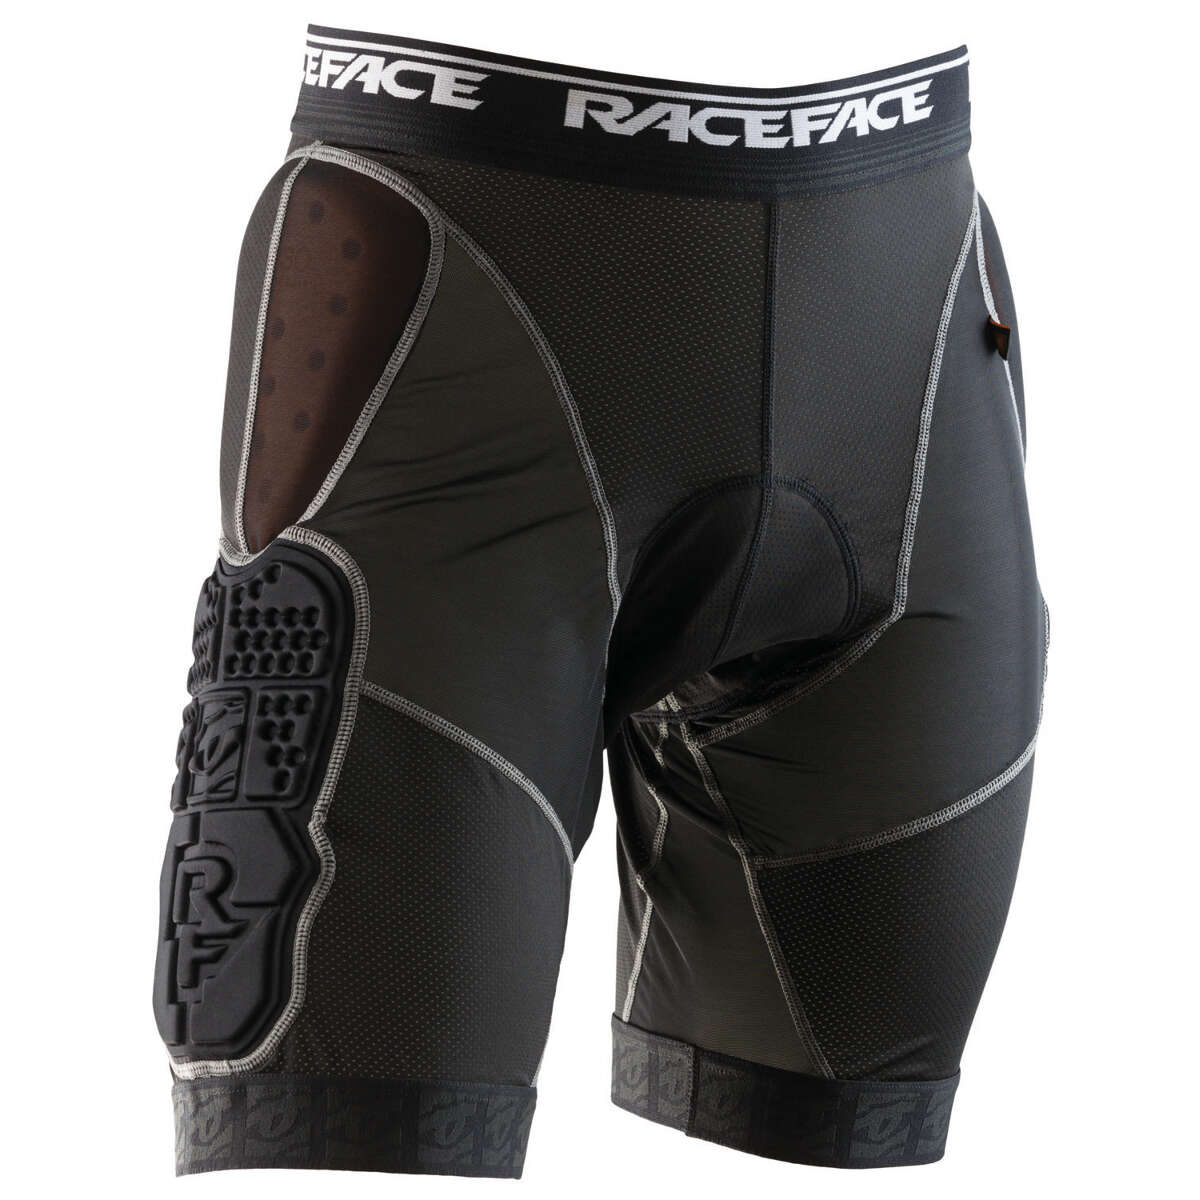 Race Face Sous-Shorts de Protection Flank Liner Stealth